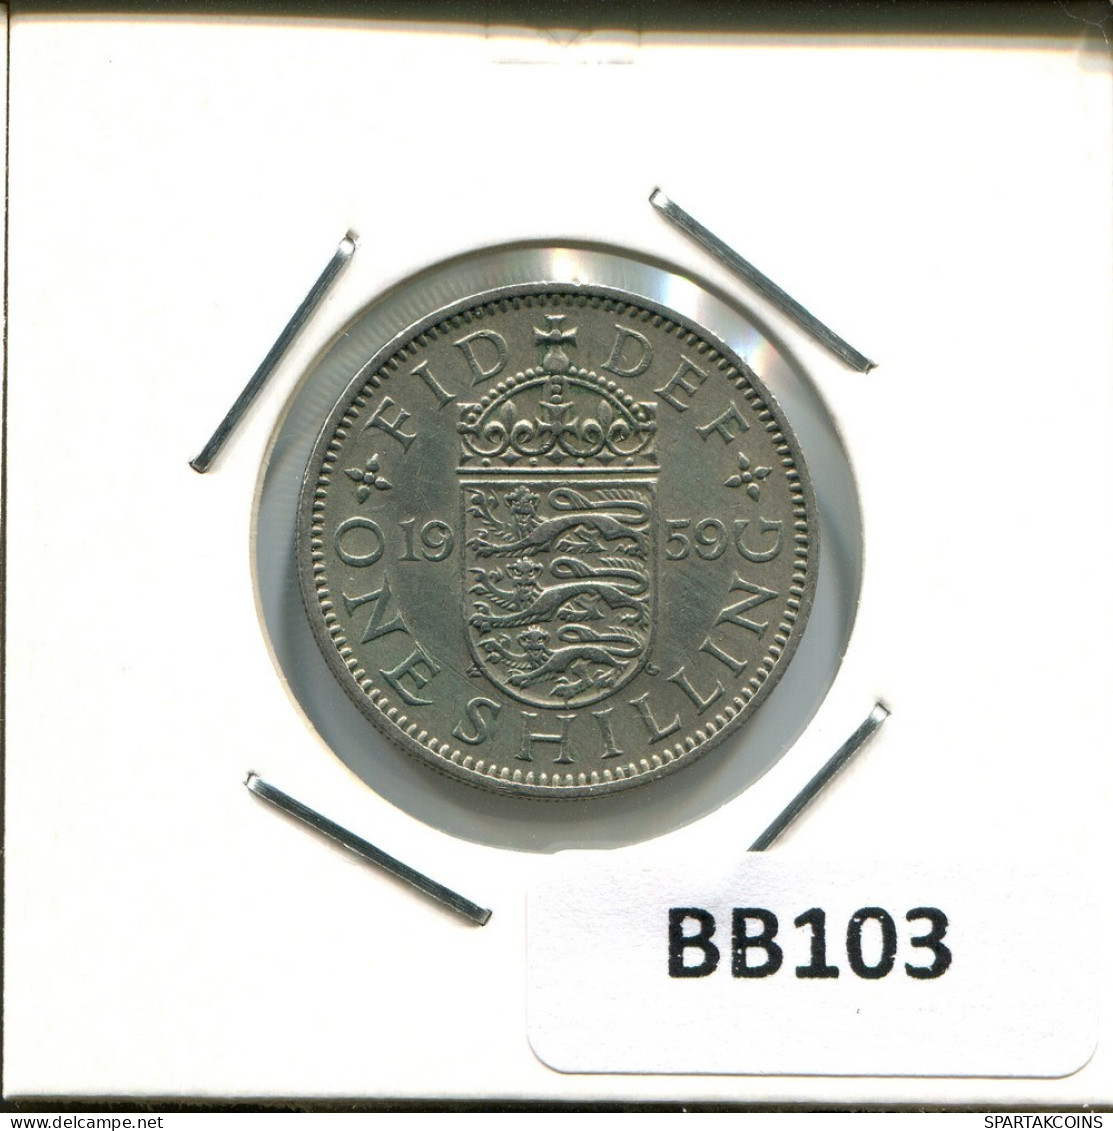 SHILLING 1959 UK GREAT BRITAIN Coin #BB103.U.A - I. 1 Shilling